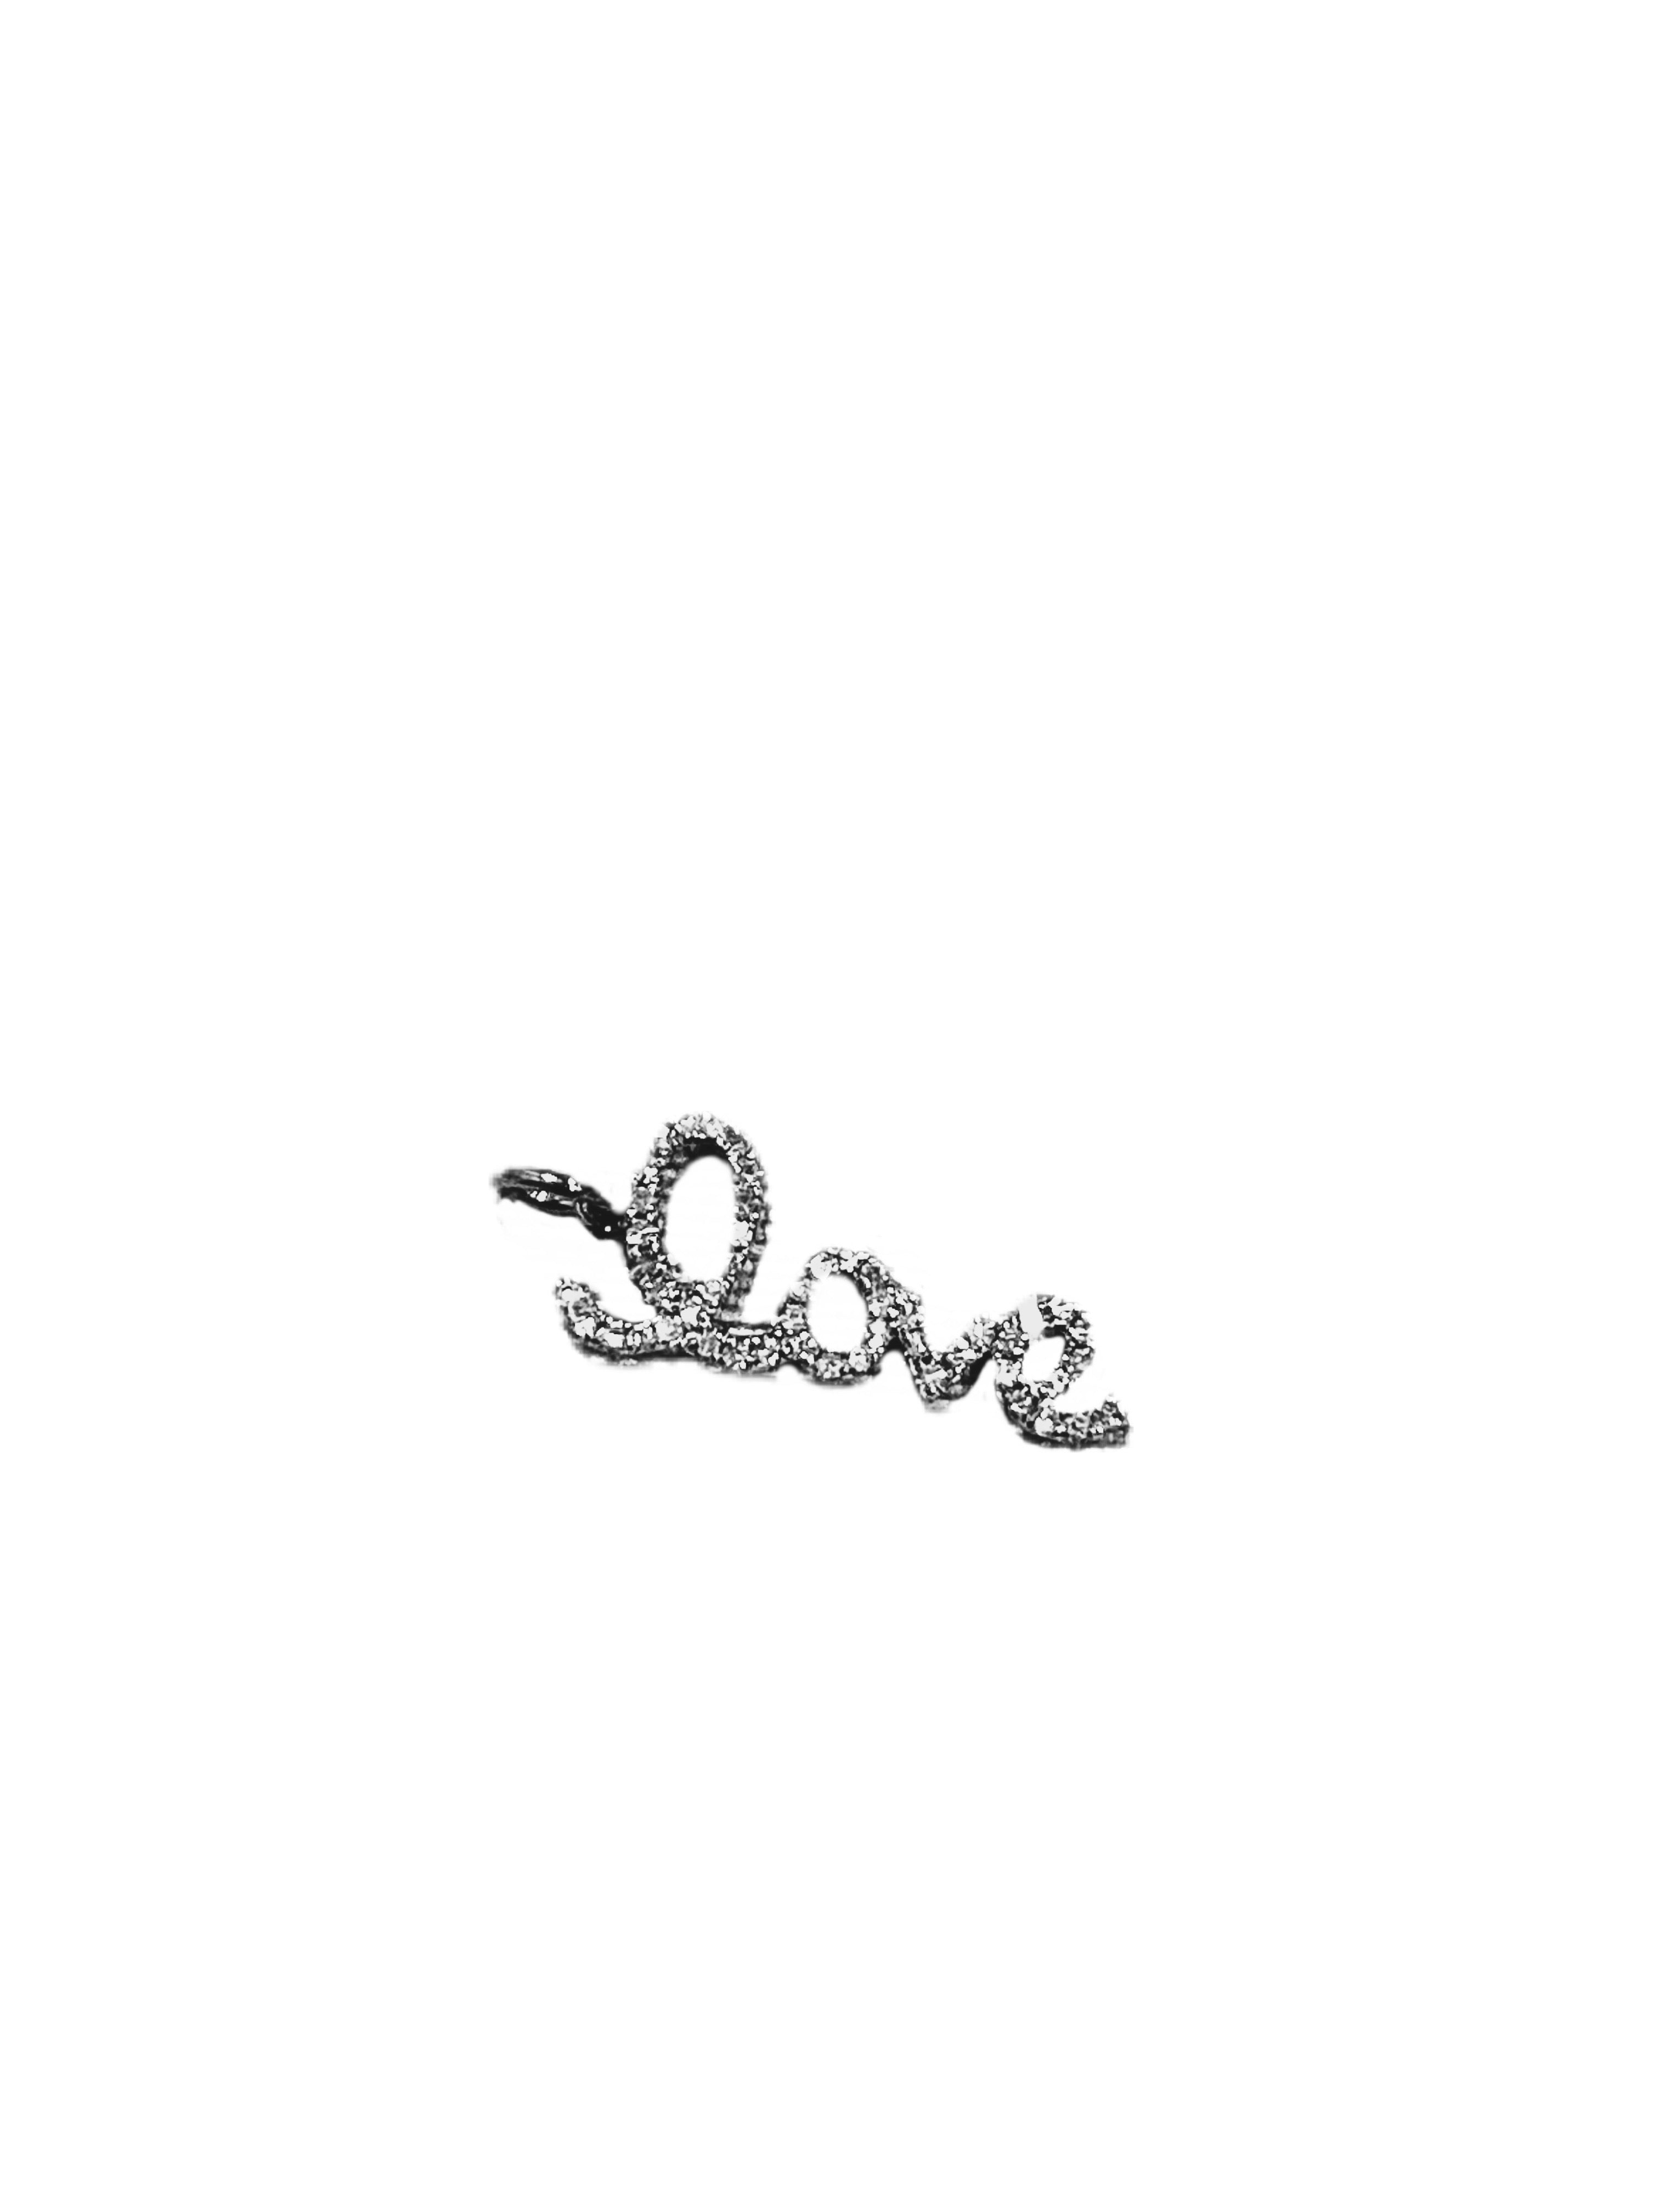 S.Row Designs Diamond Love Pendant